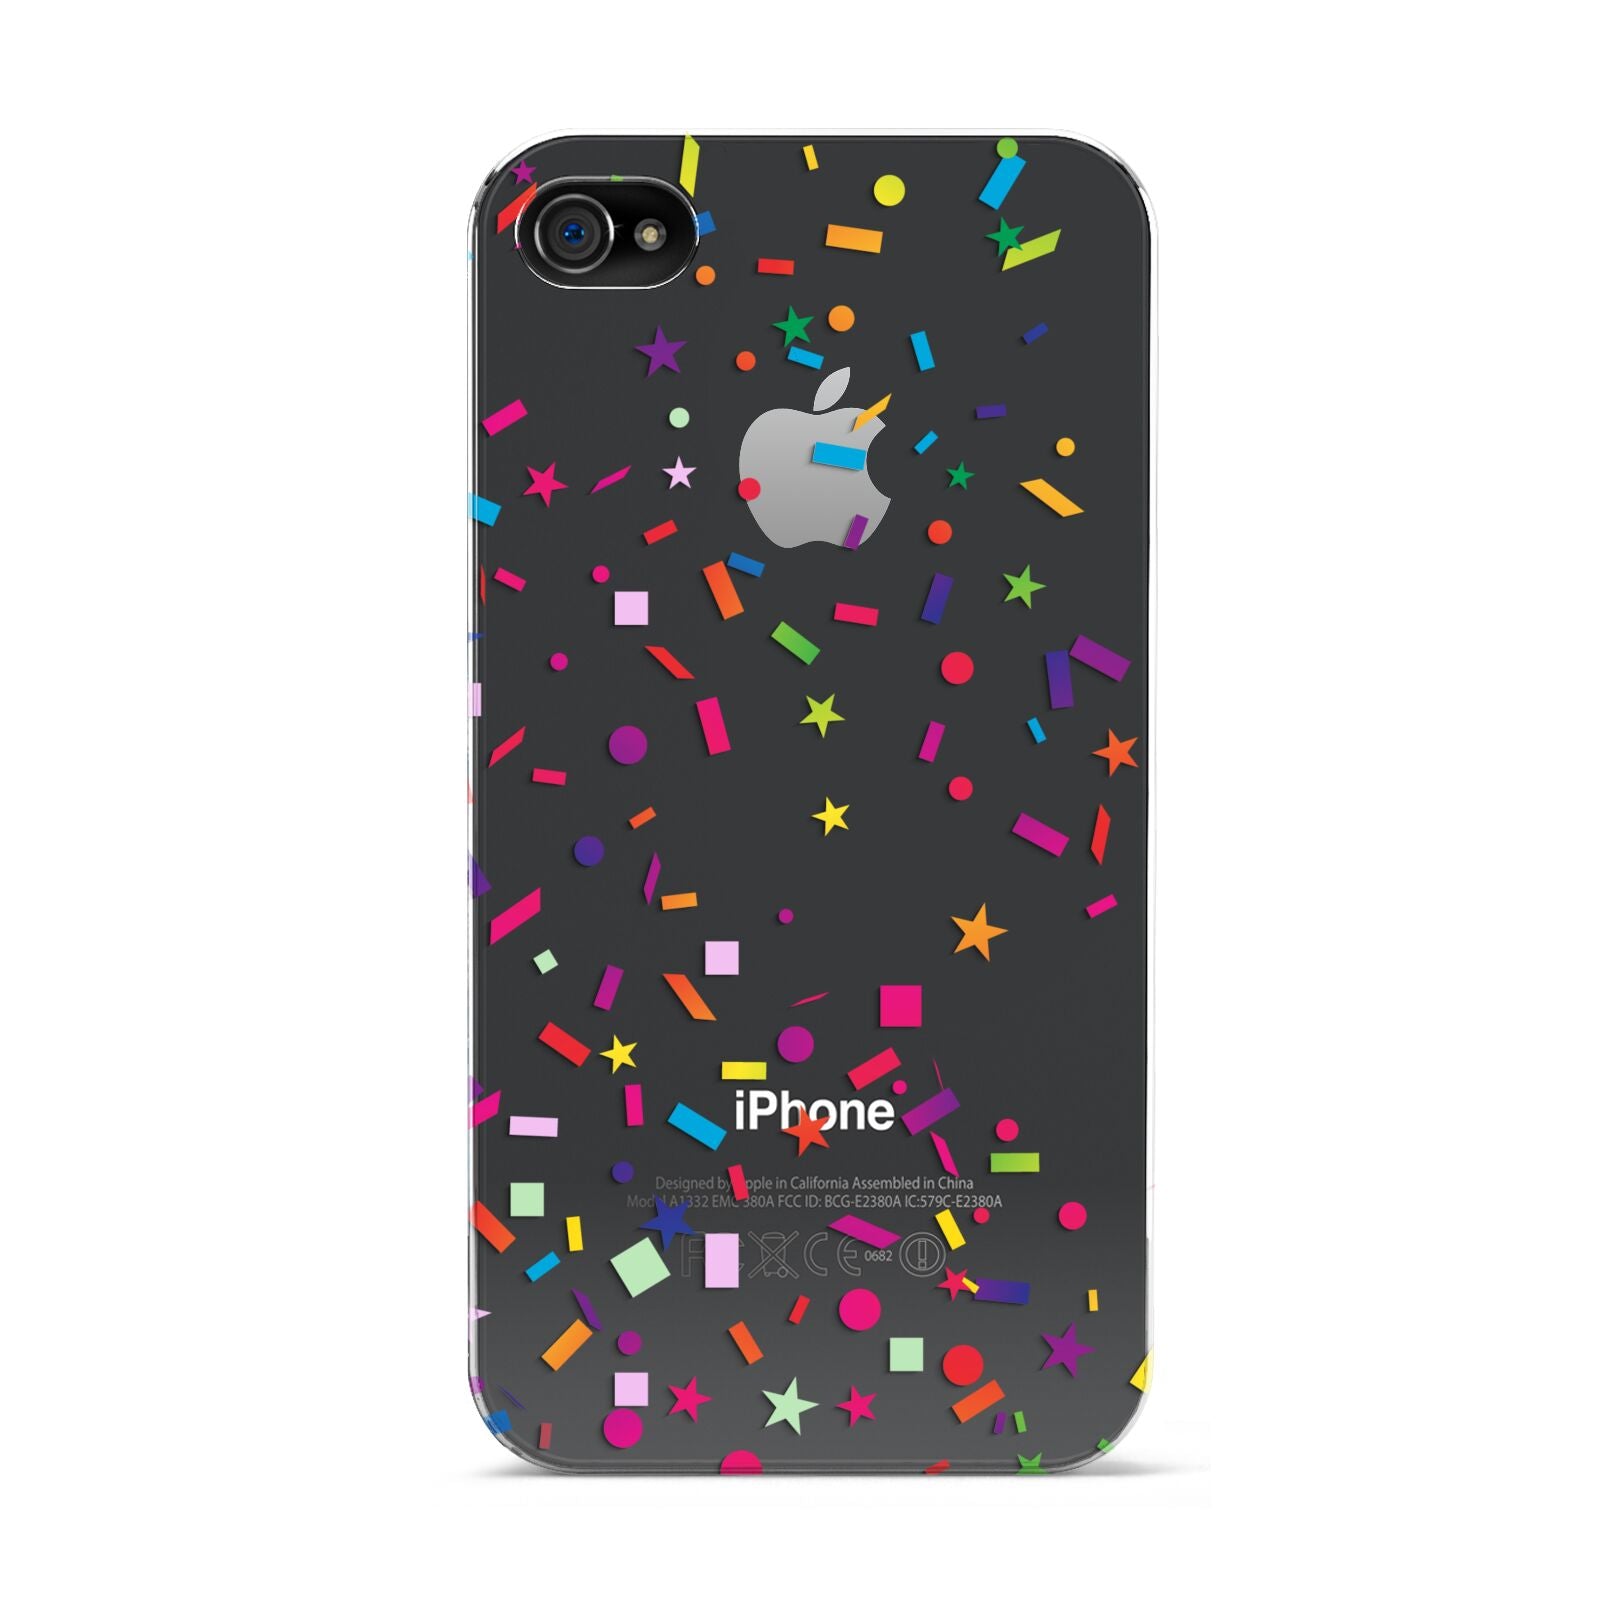 Confetti Apple iPhone 4s Case